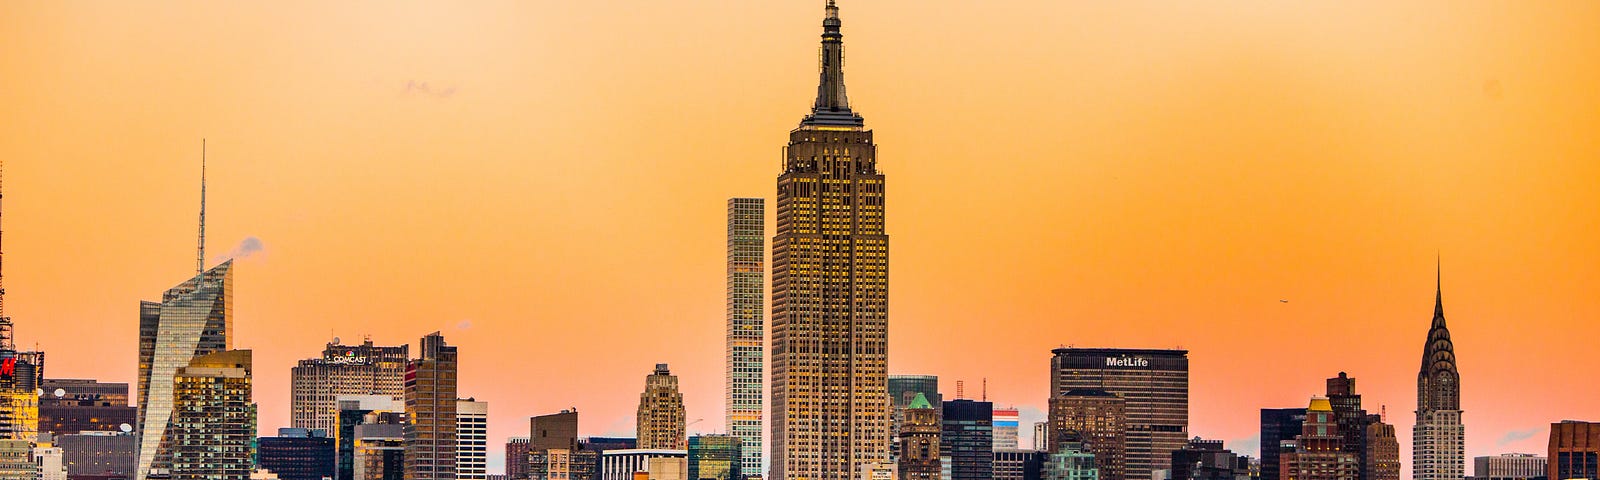 A view of Midtown Manhattan just after sunset